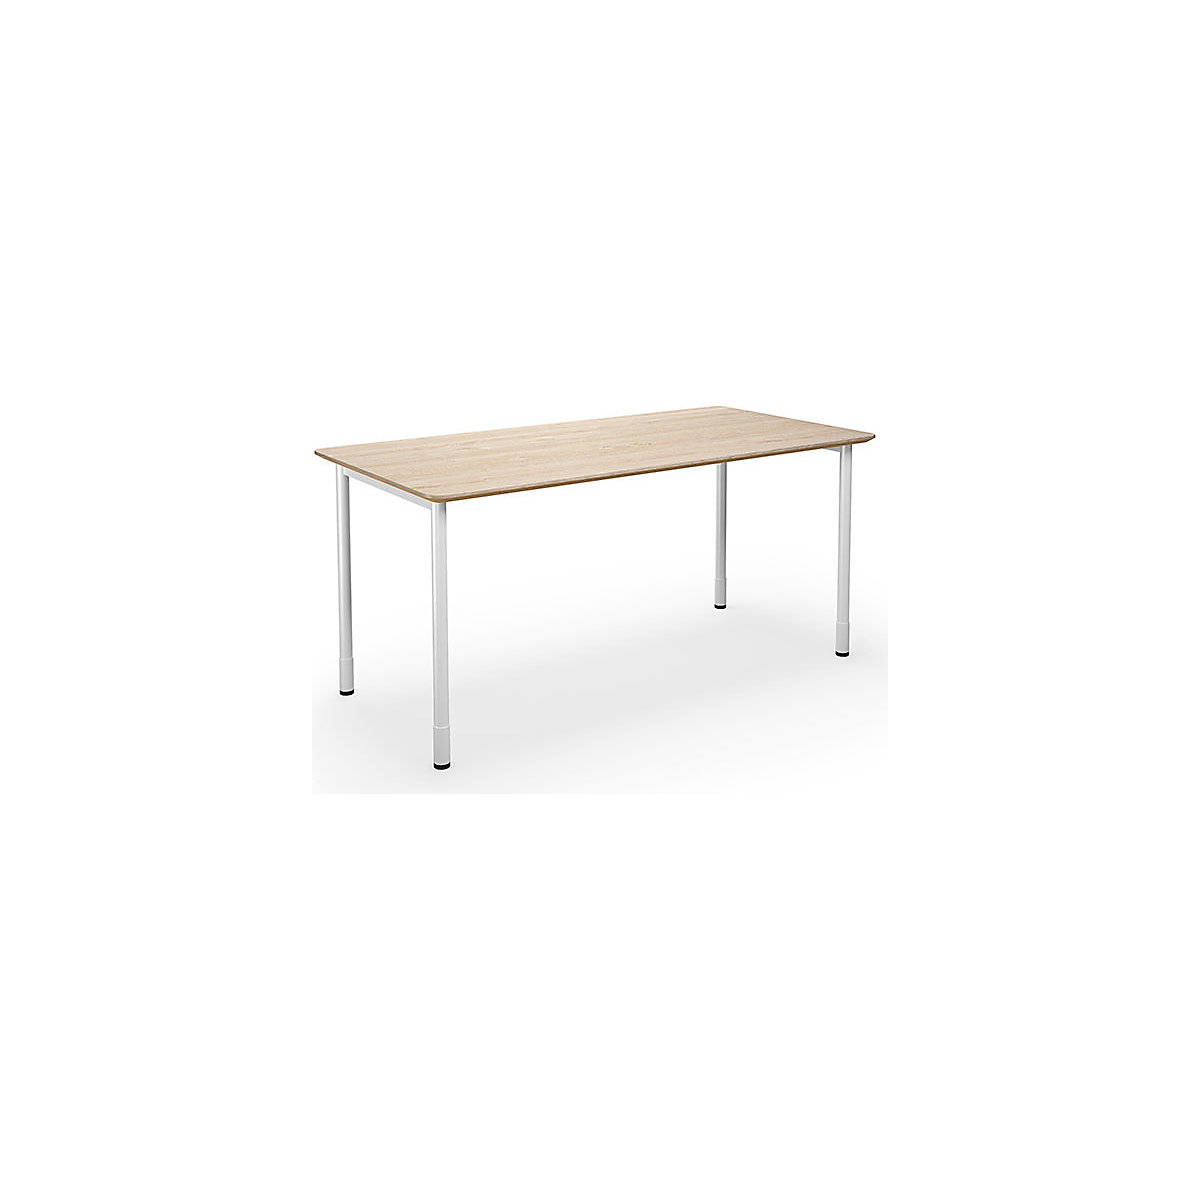 DUO-C Trend multi-purpose desk, straight tabletop, rounded corners, WxD 1600 x 800 mm, oak, white-4